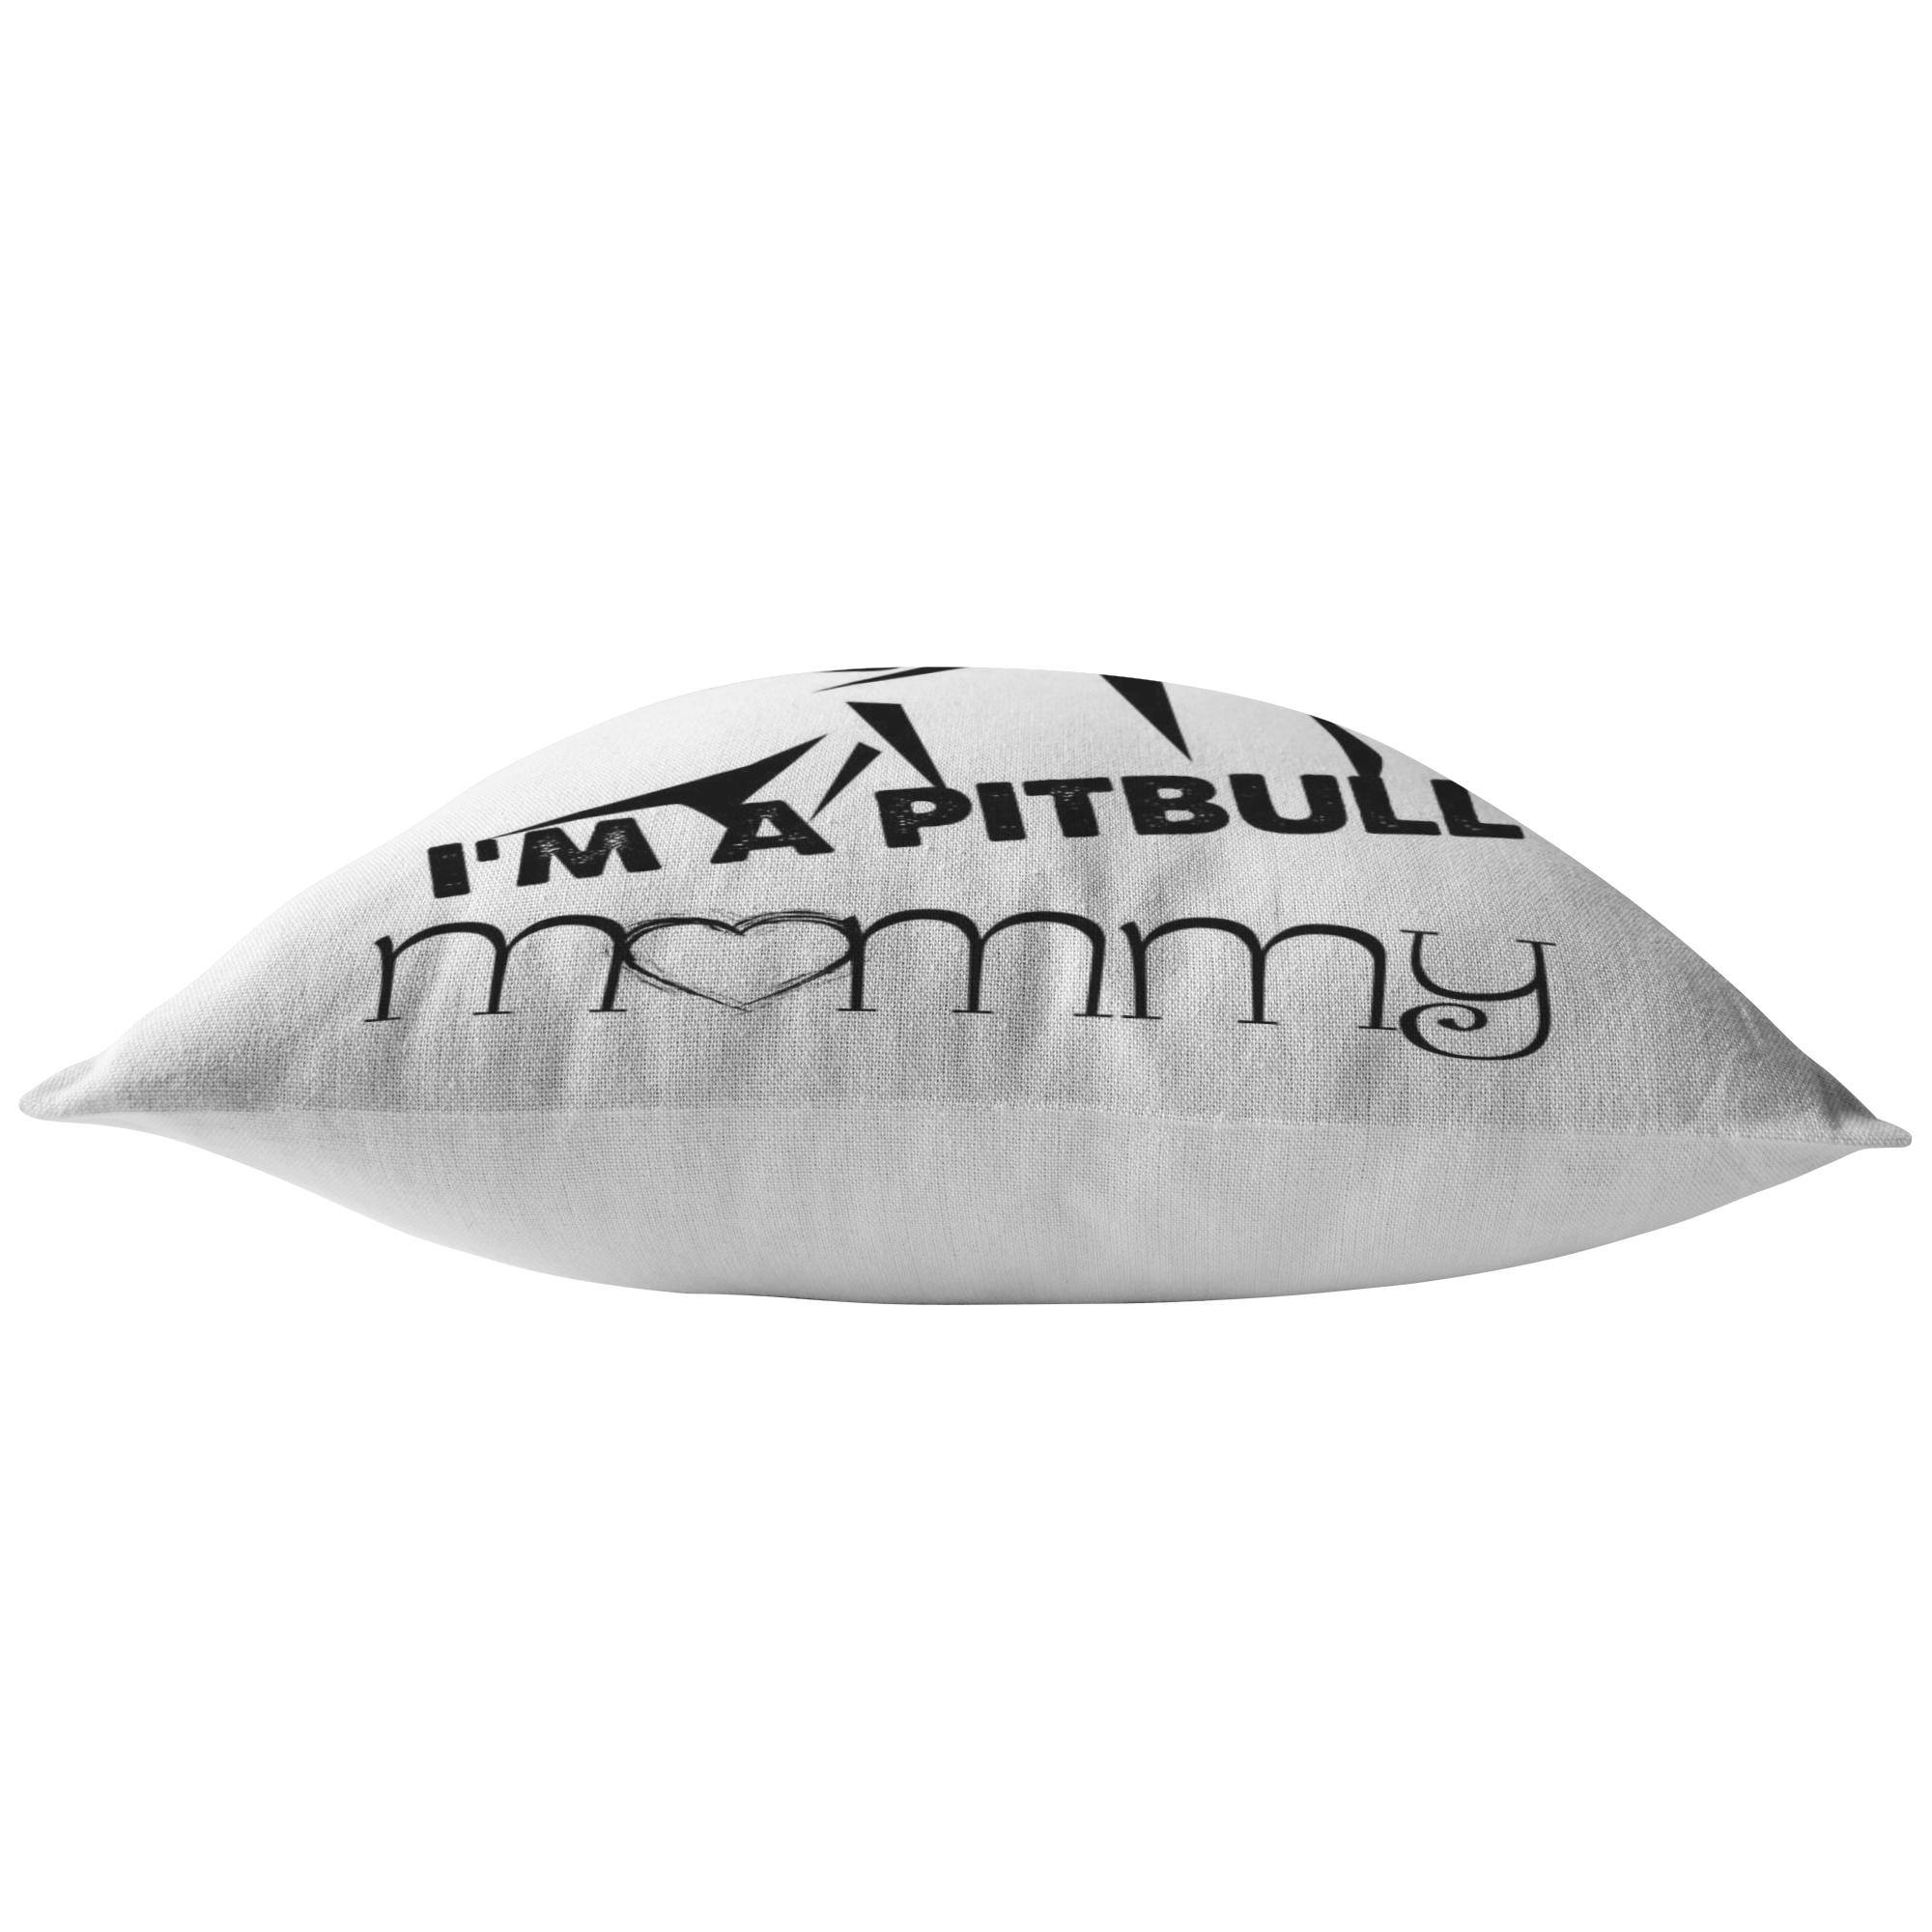 I am a Pitbull Mommy - Pillow